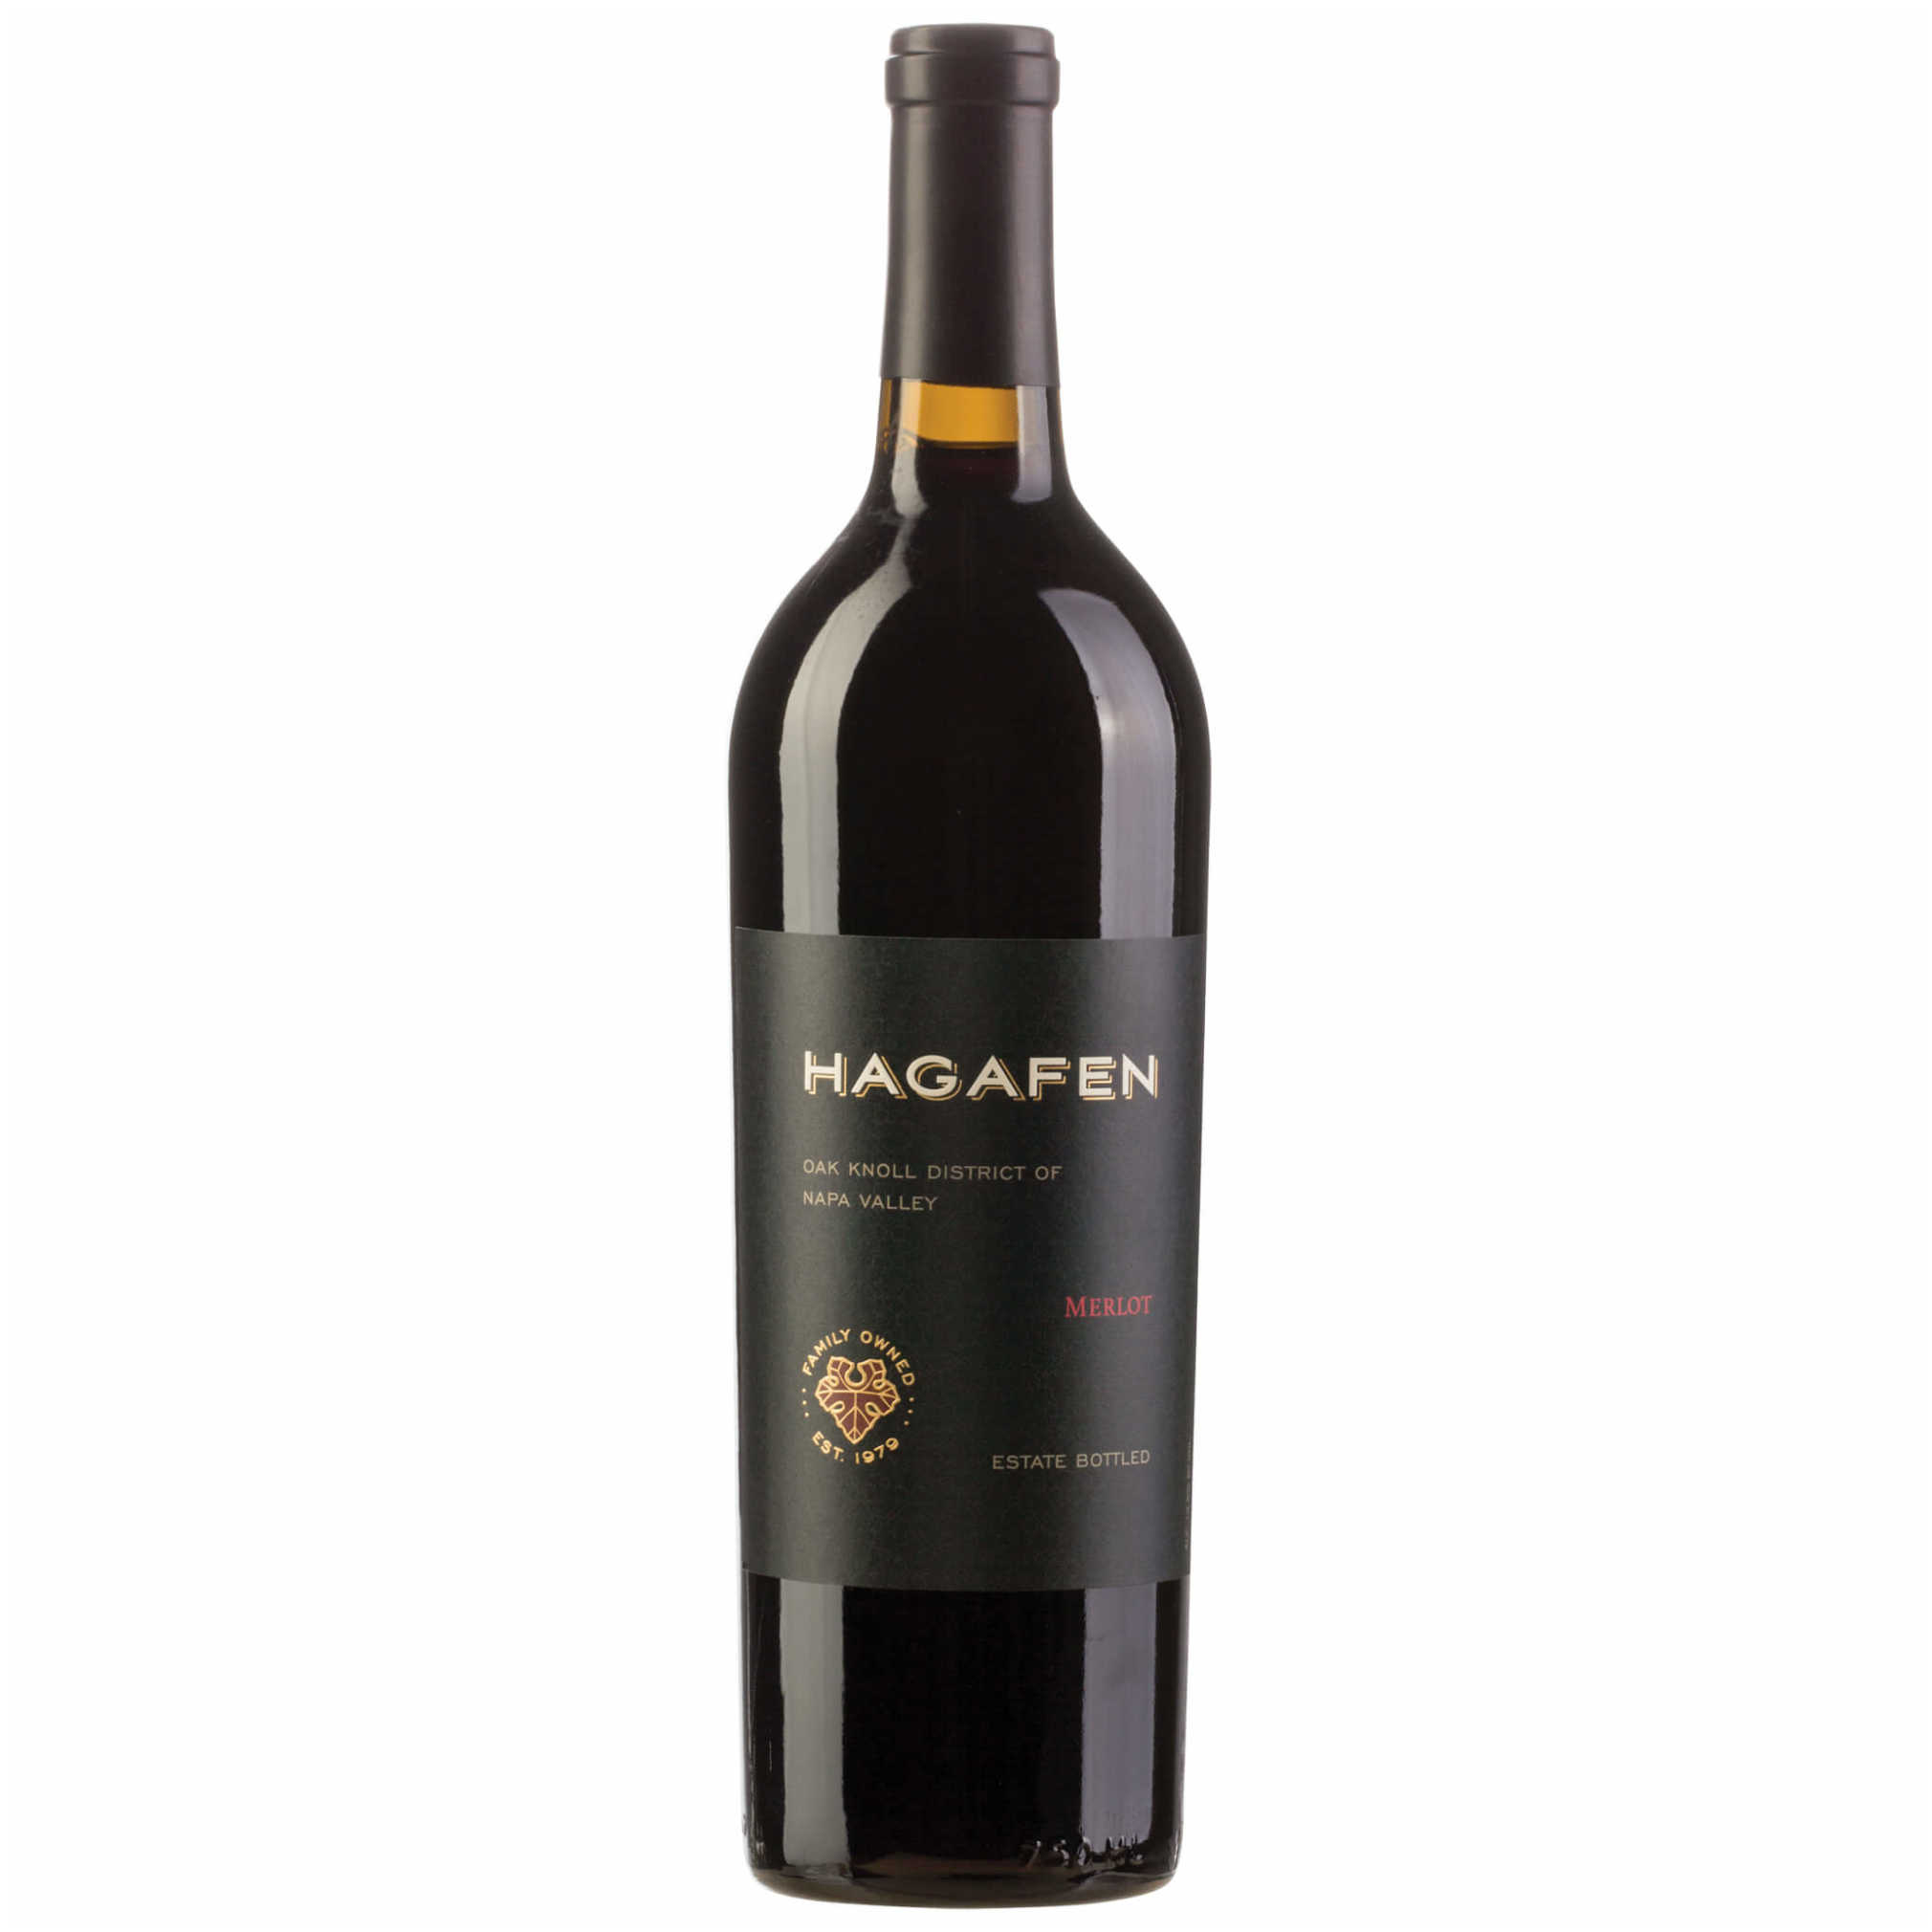 Hagafen Napa Valley Merlot - A Kosher Wine From California